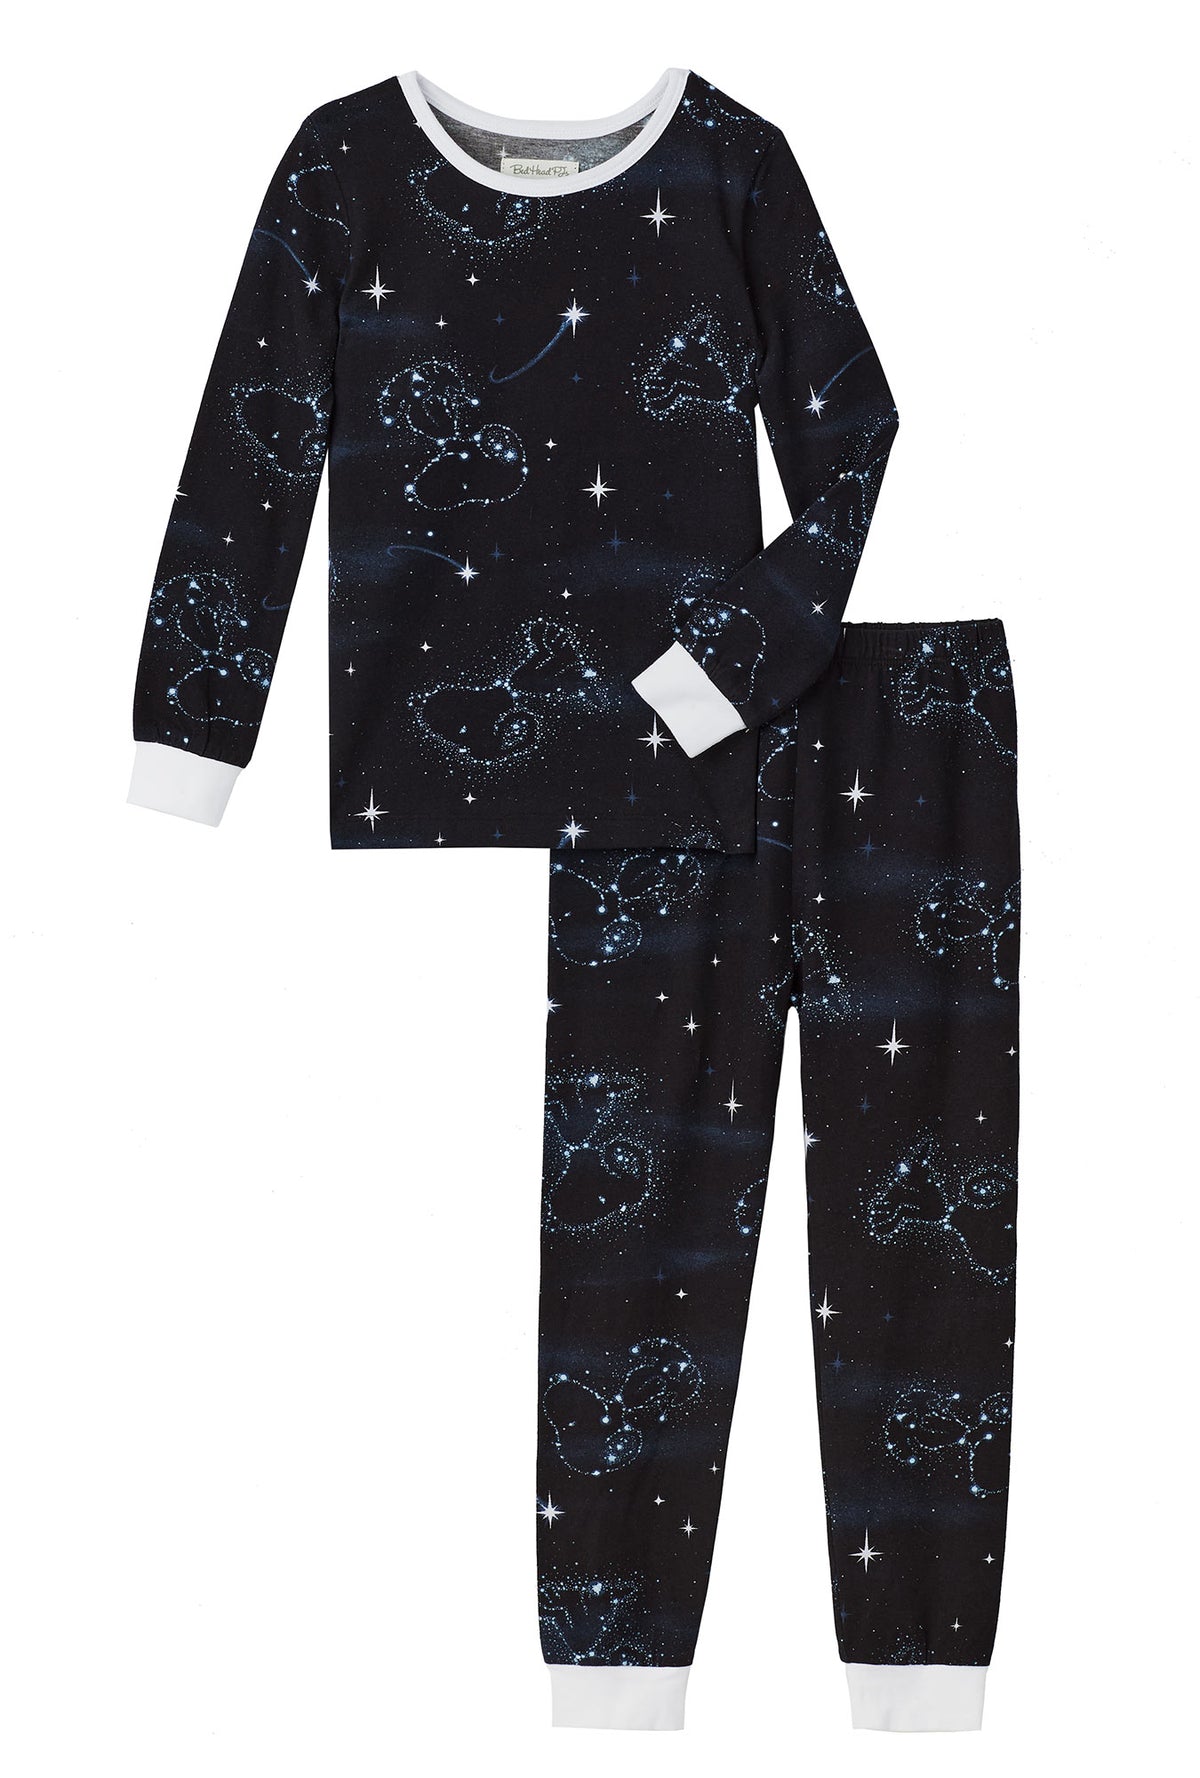 A girl wearing black long sleeve stretch jersey kids pj set with celestial snoopy print.